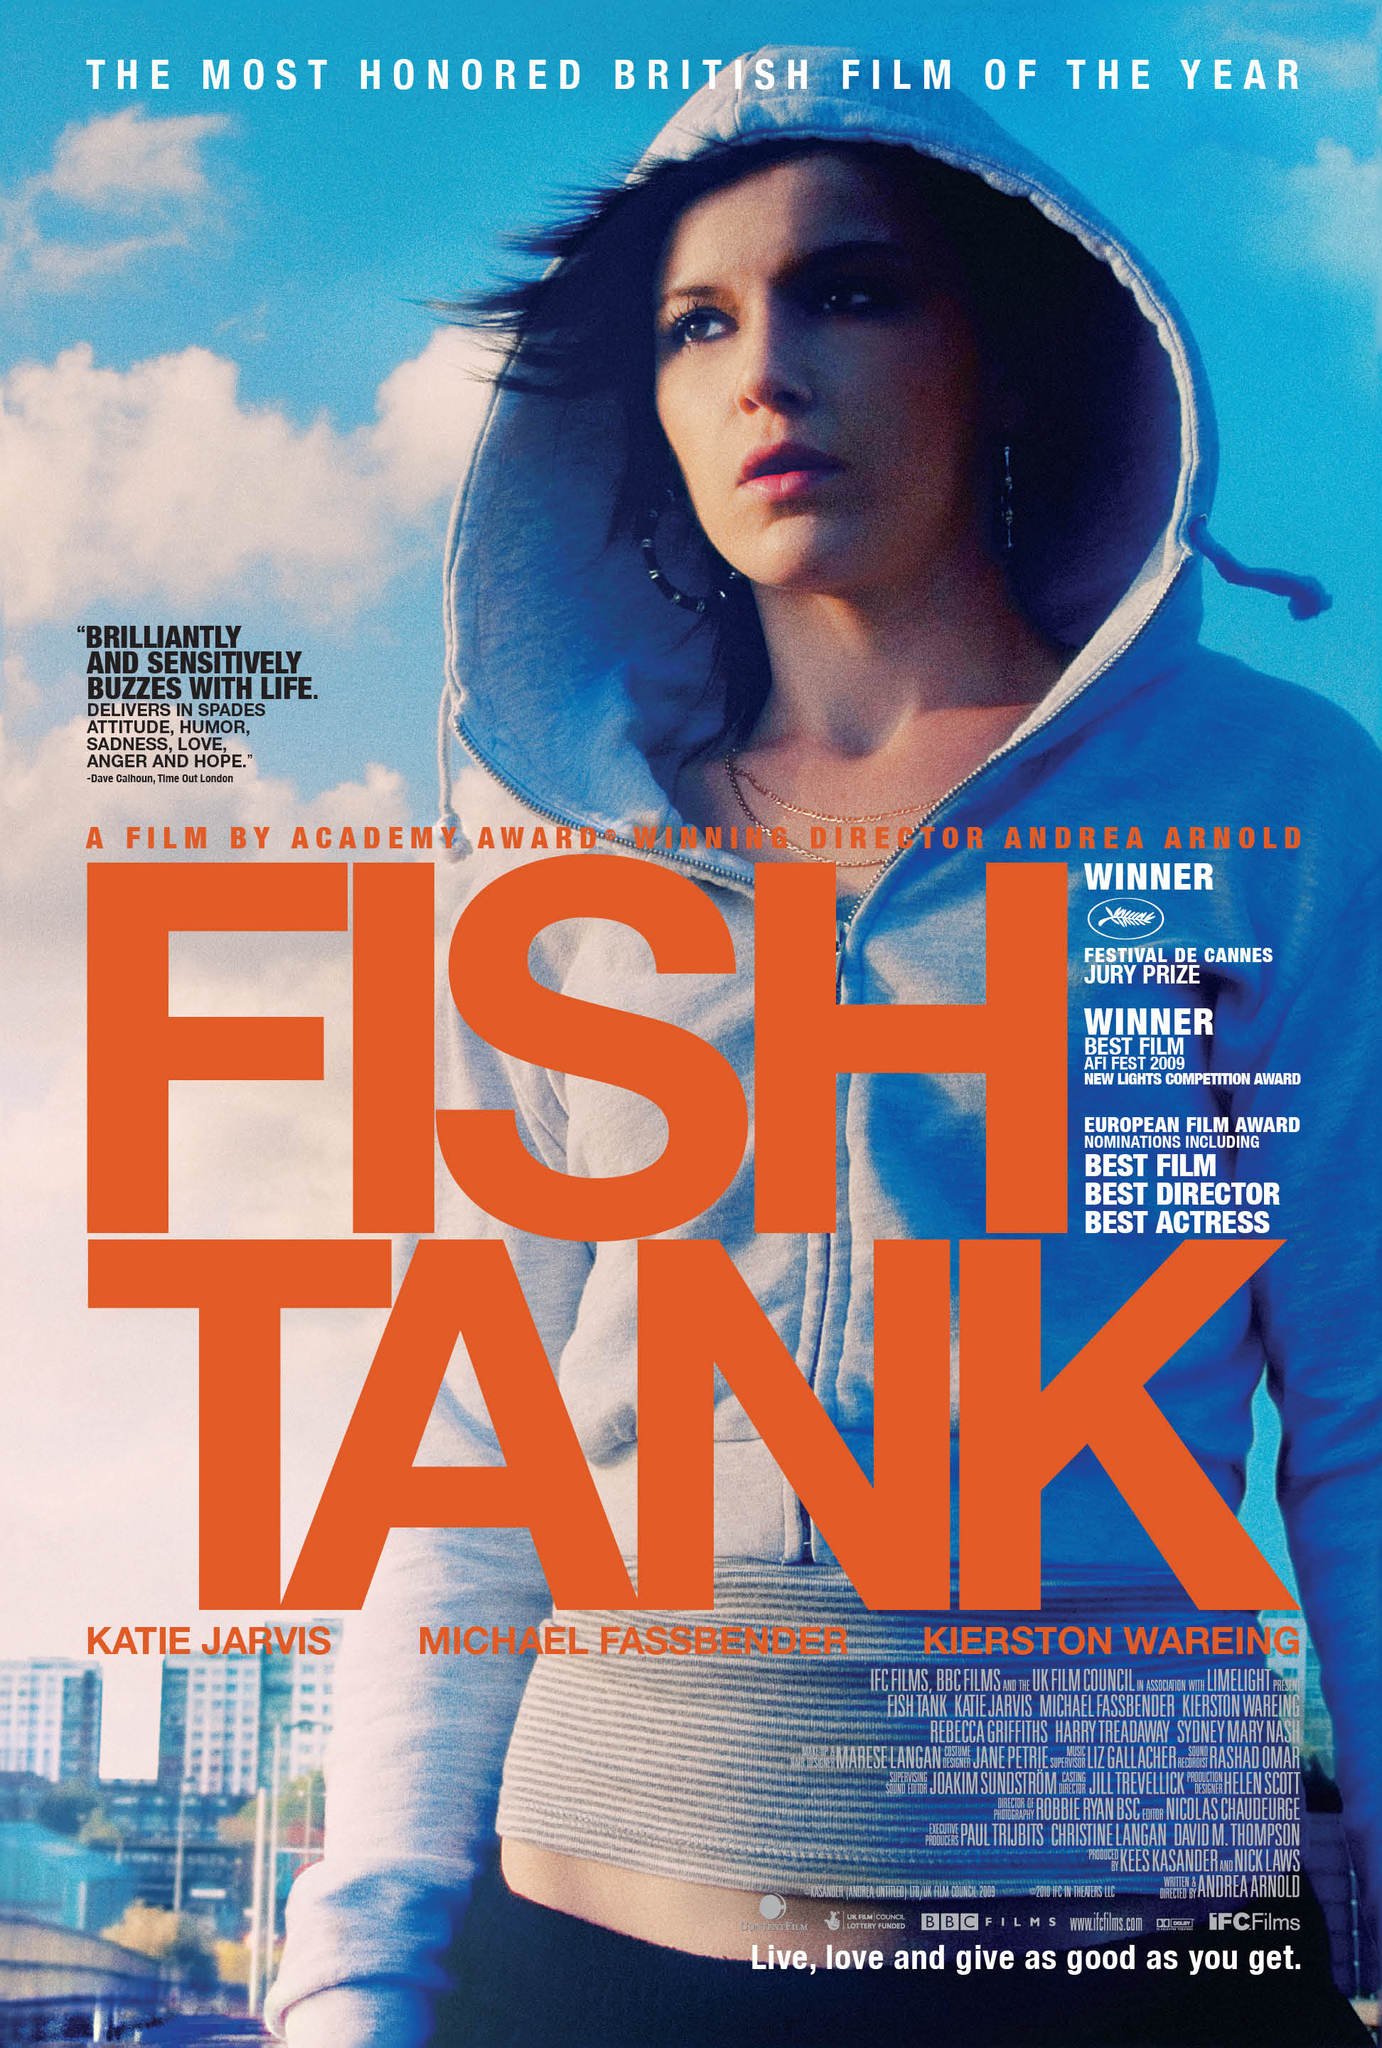 Poster Fish Tank